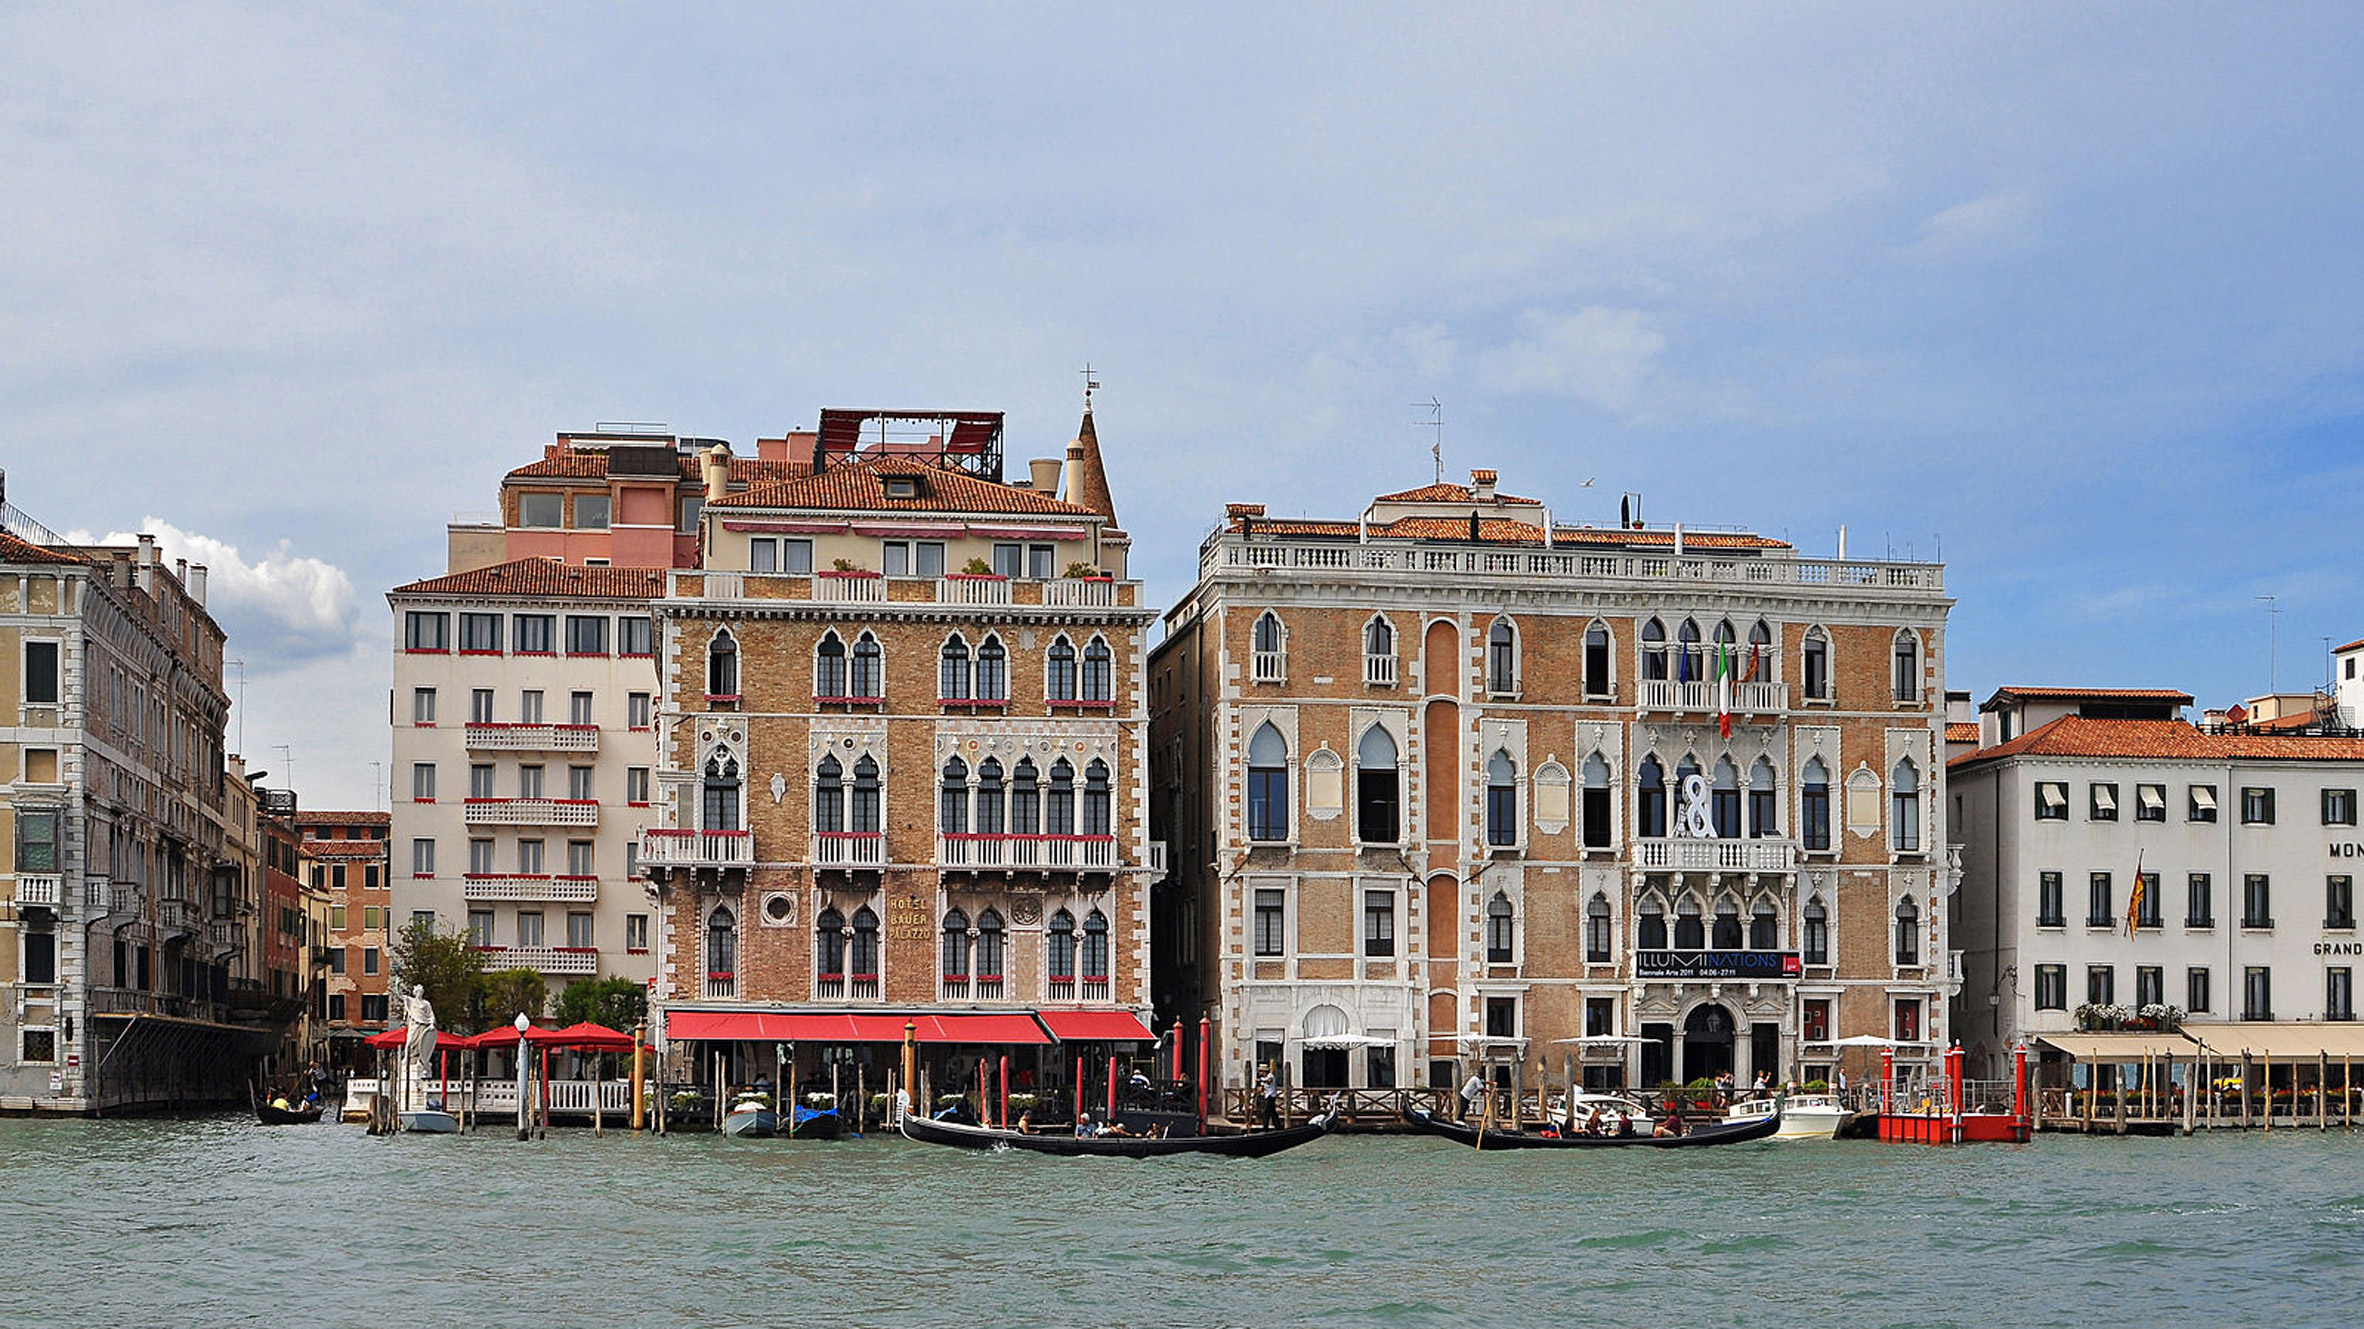 Venice Architecture Biennale 2020 postponed due to coronavirus